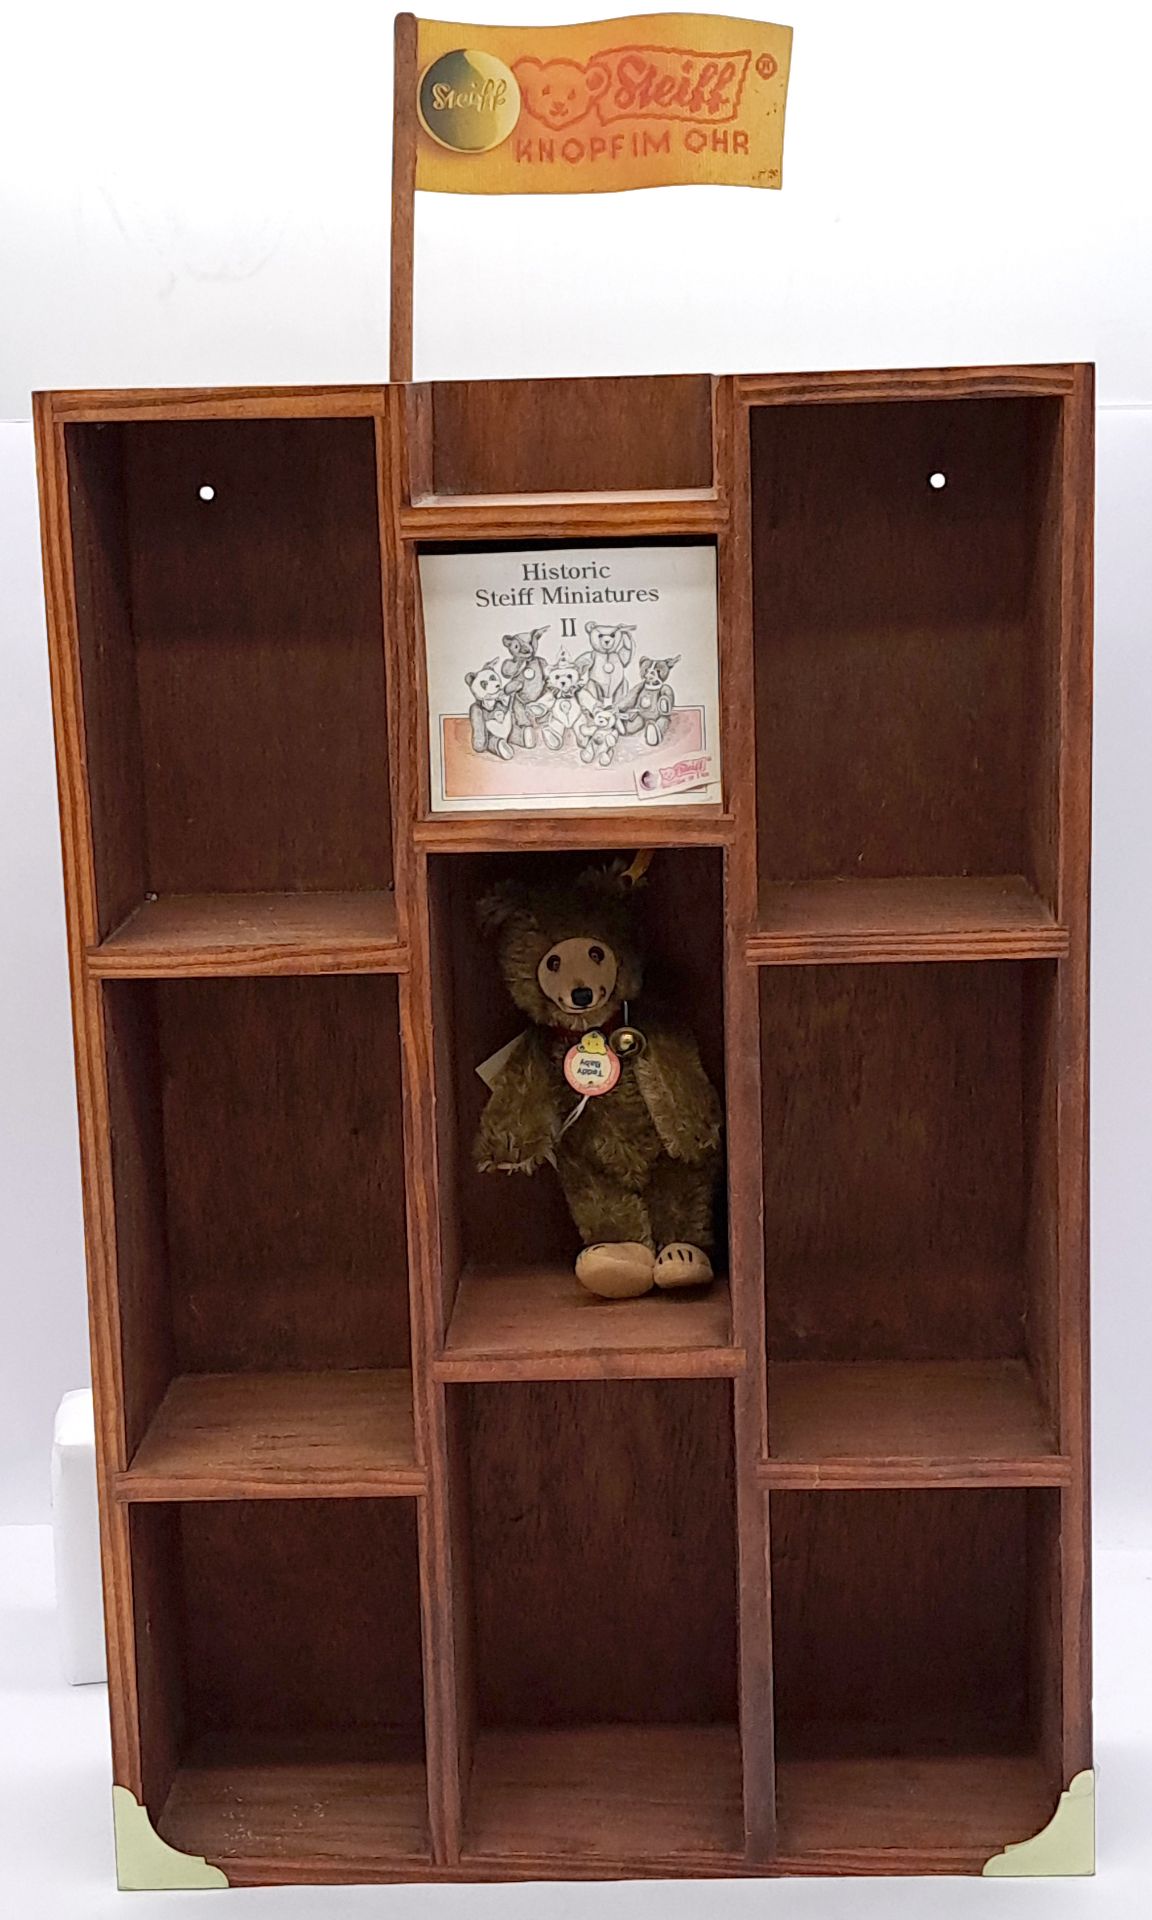 Steiff Historic Miniatures II Display wooden shelving, plus Teddy Baby miniature